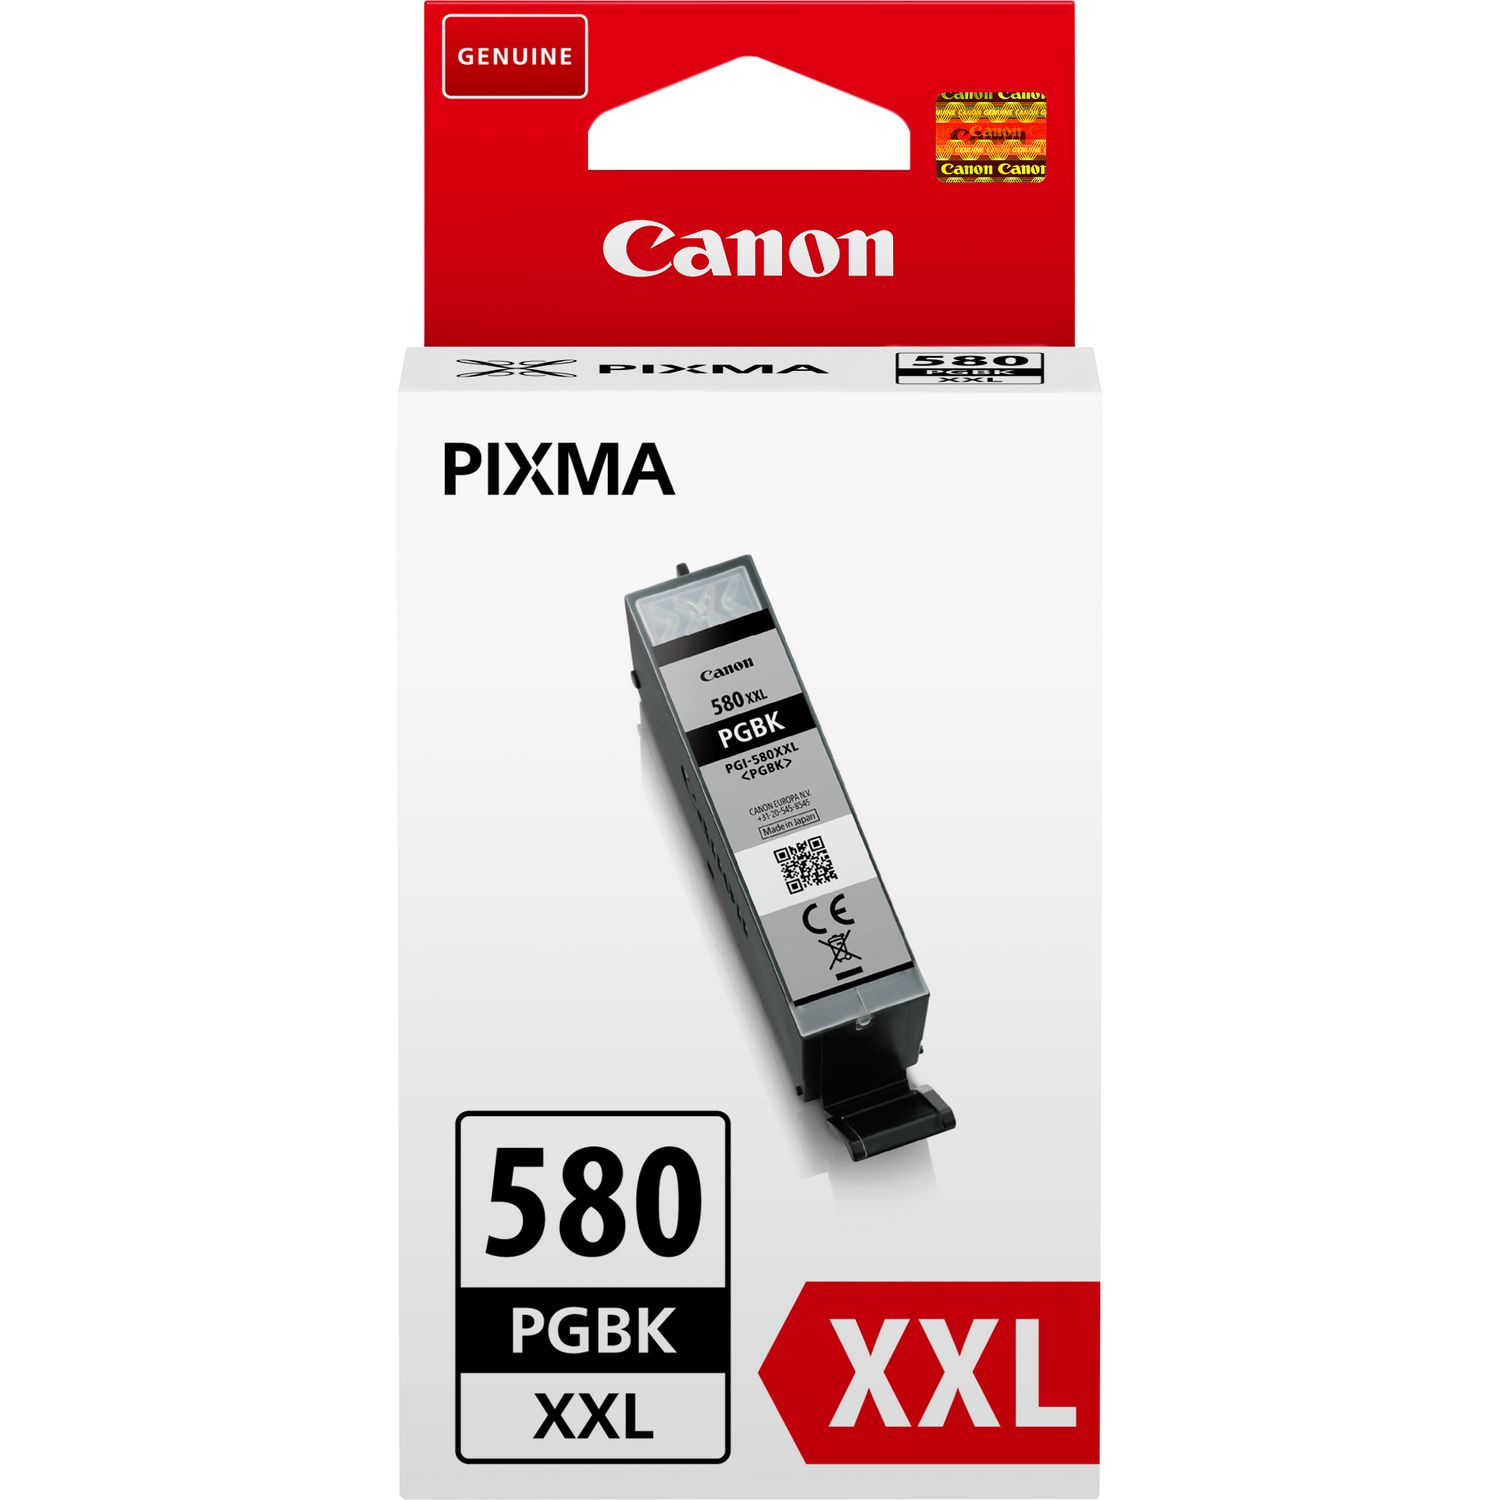 Ink Pgi 580xxl Pgbk Canon Supplies Ink Hv 1970c001 4549292086836